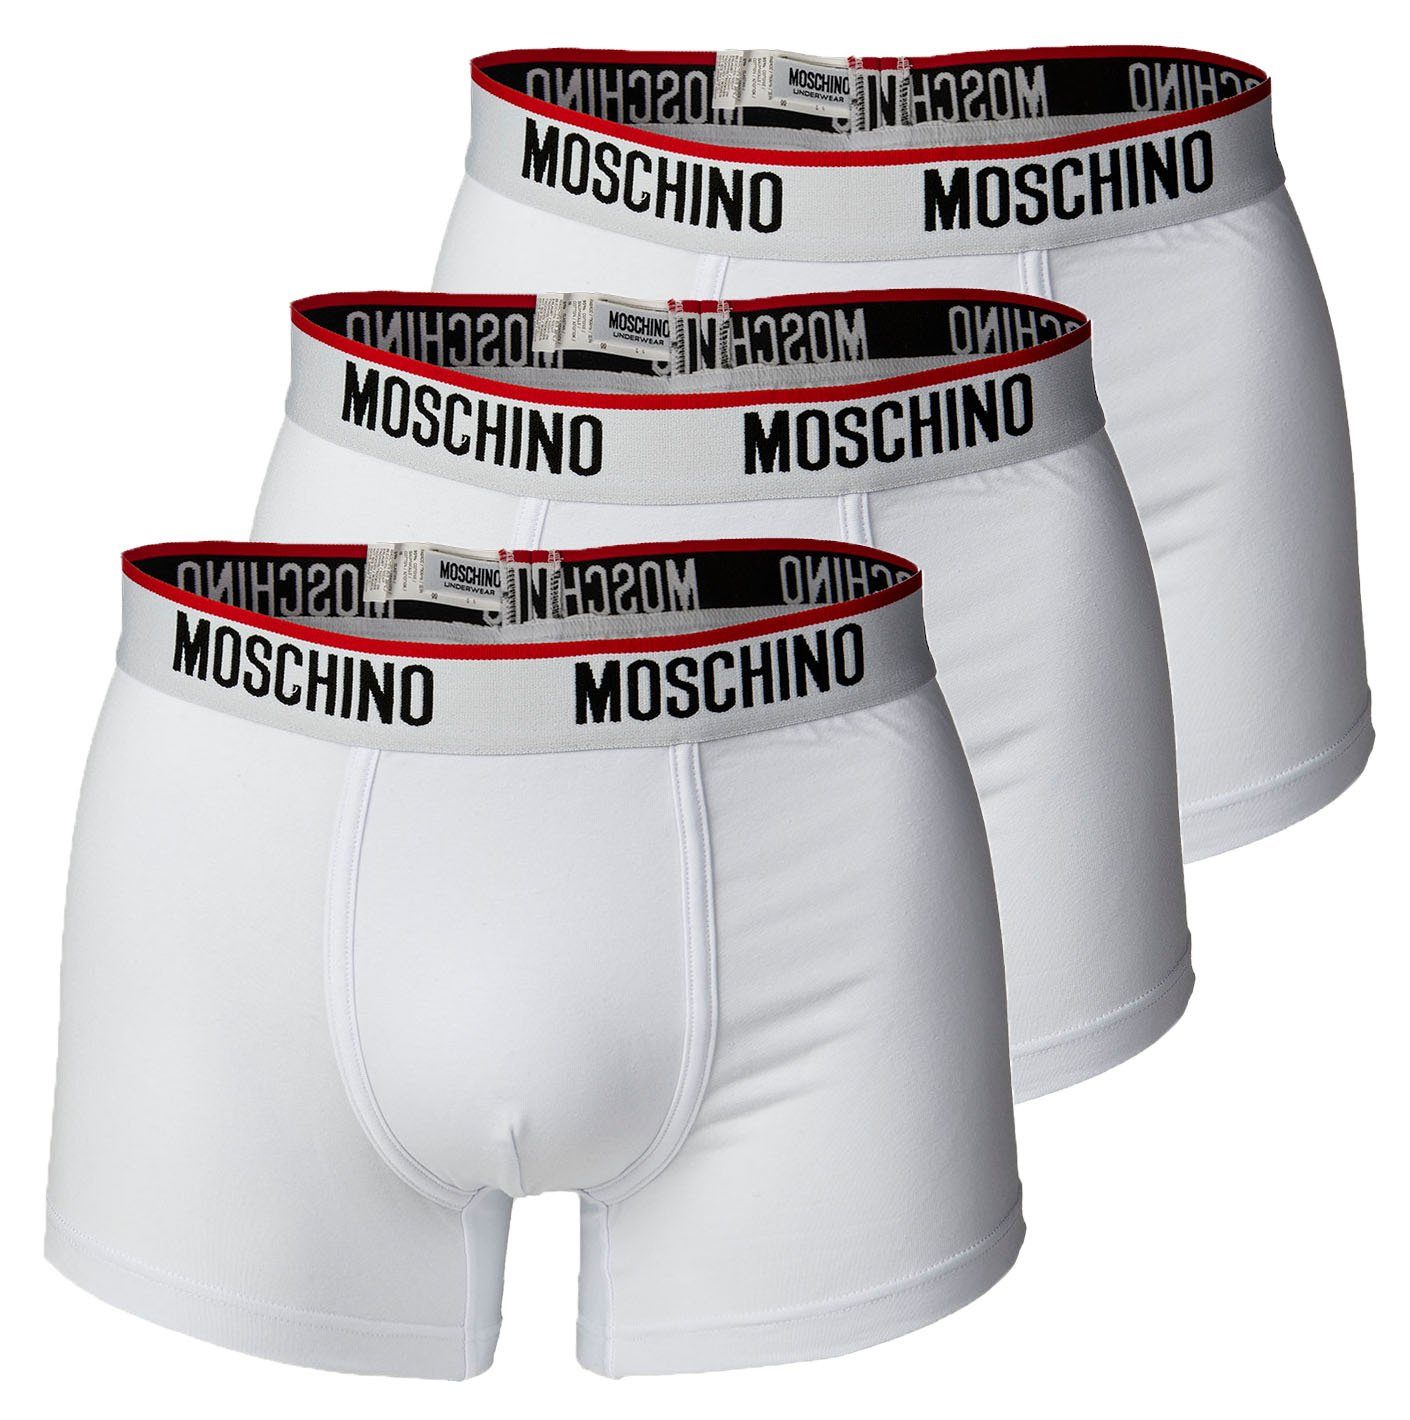 Moschino Boxer Herren Shorts 3er Pack - Pants, Unterhose, Cotton Weiß